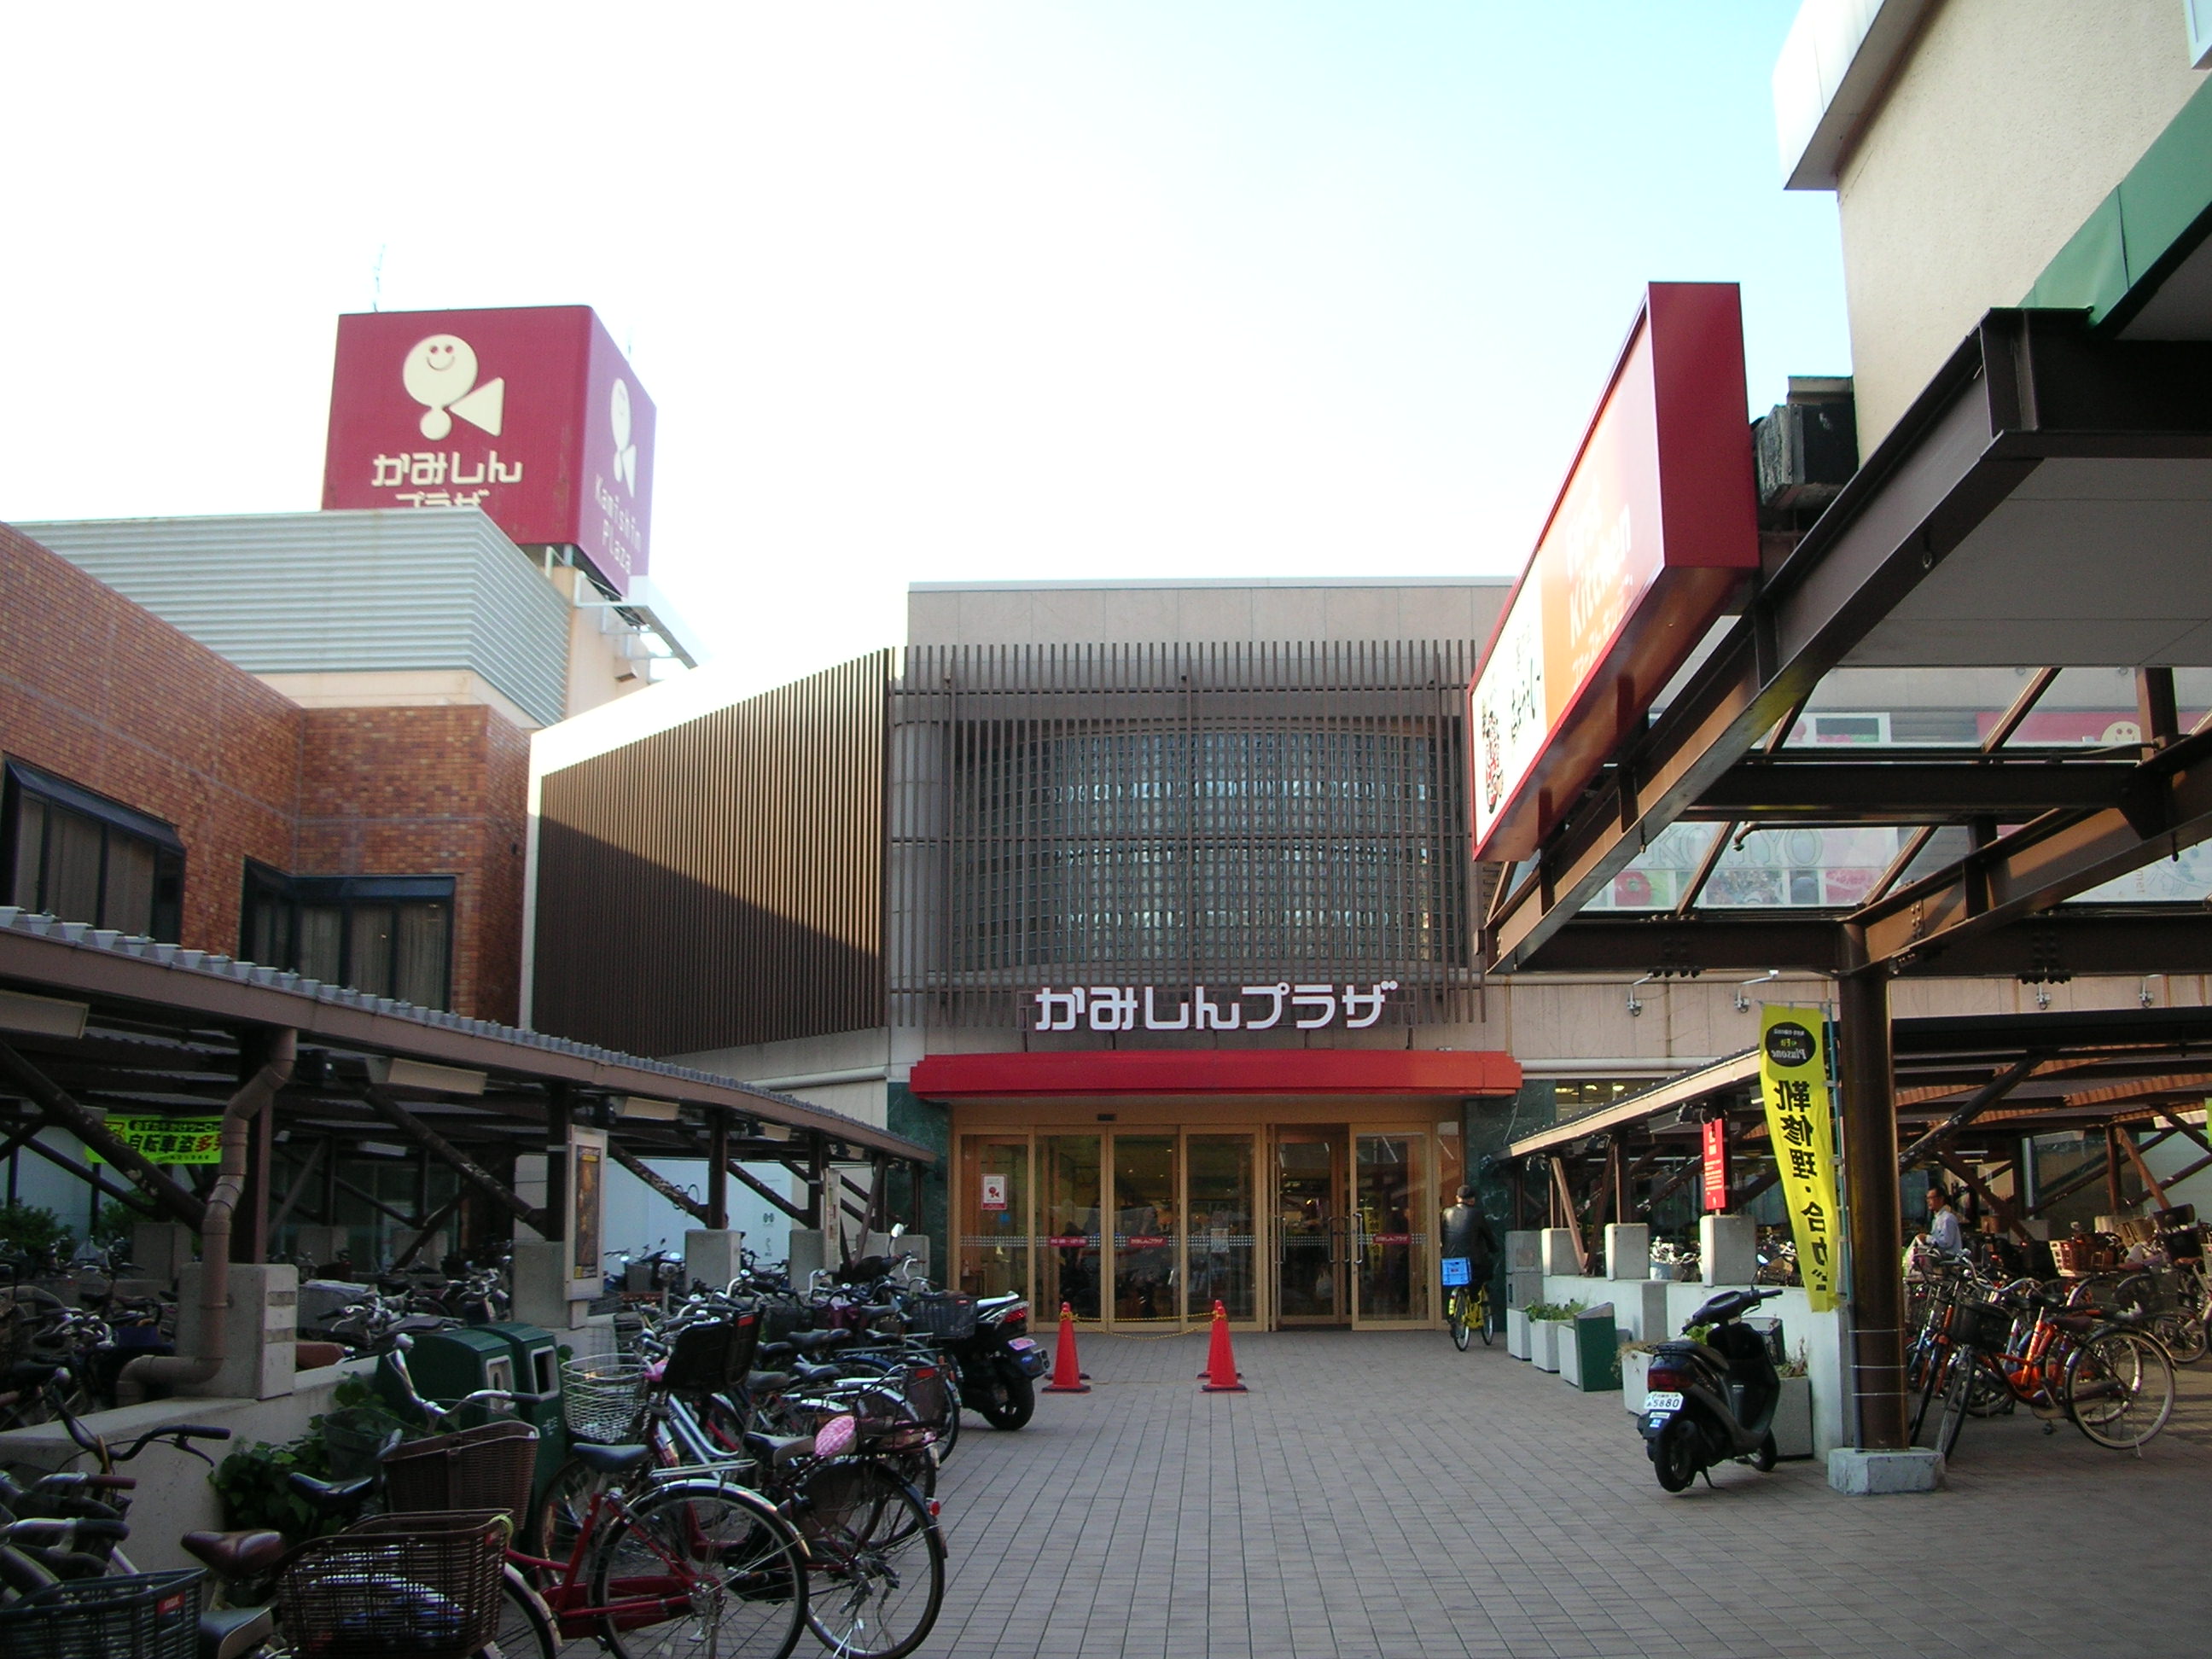 Shopping centre. Kamishin 546m to Plaza (shopping center)